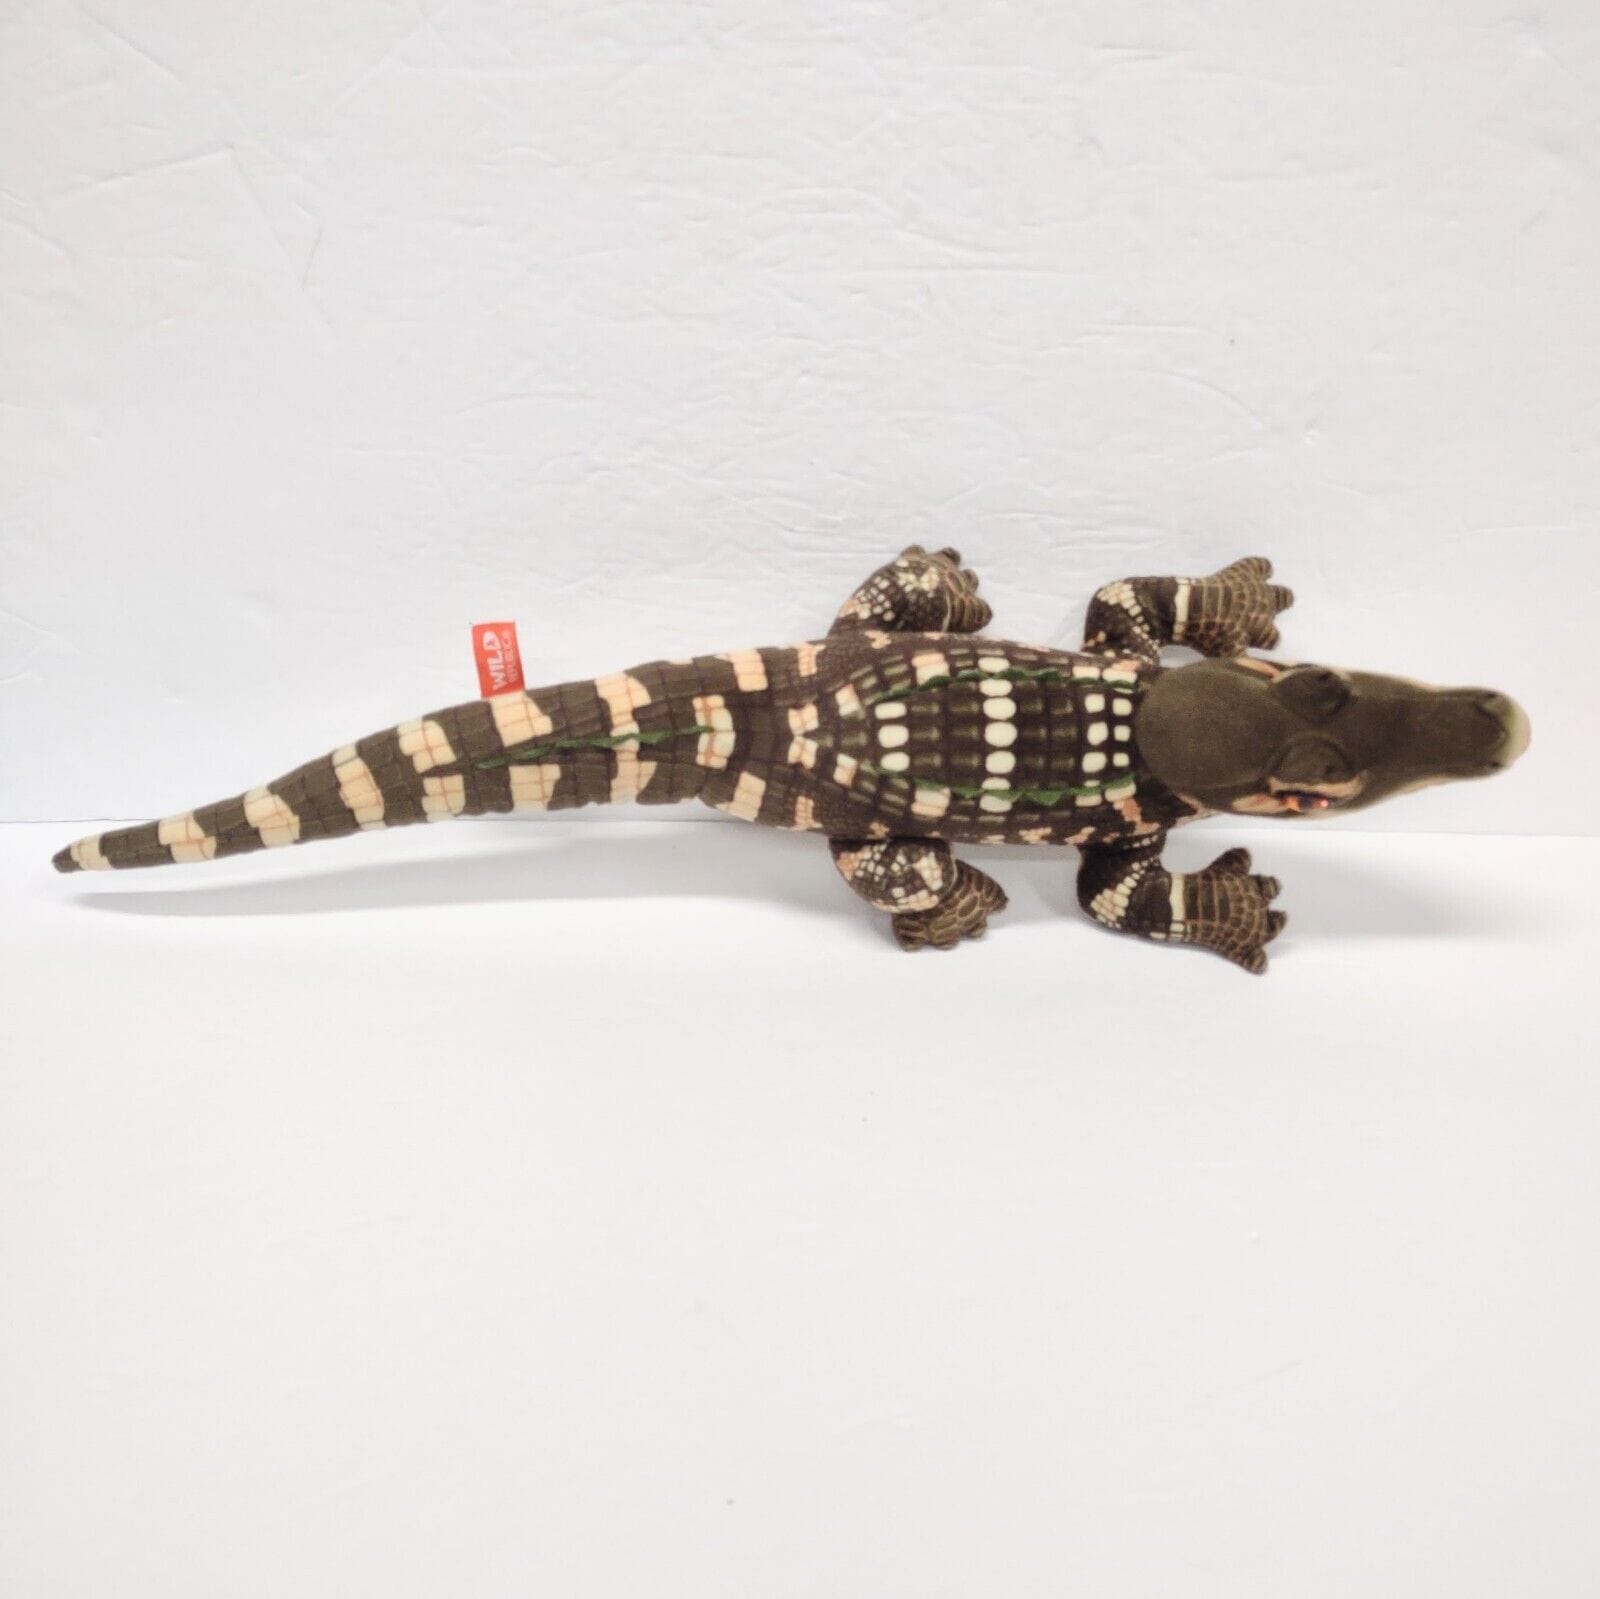 MIni Living Stream Baby Alligator By Wild Republic